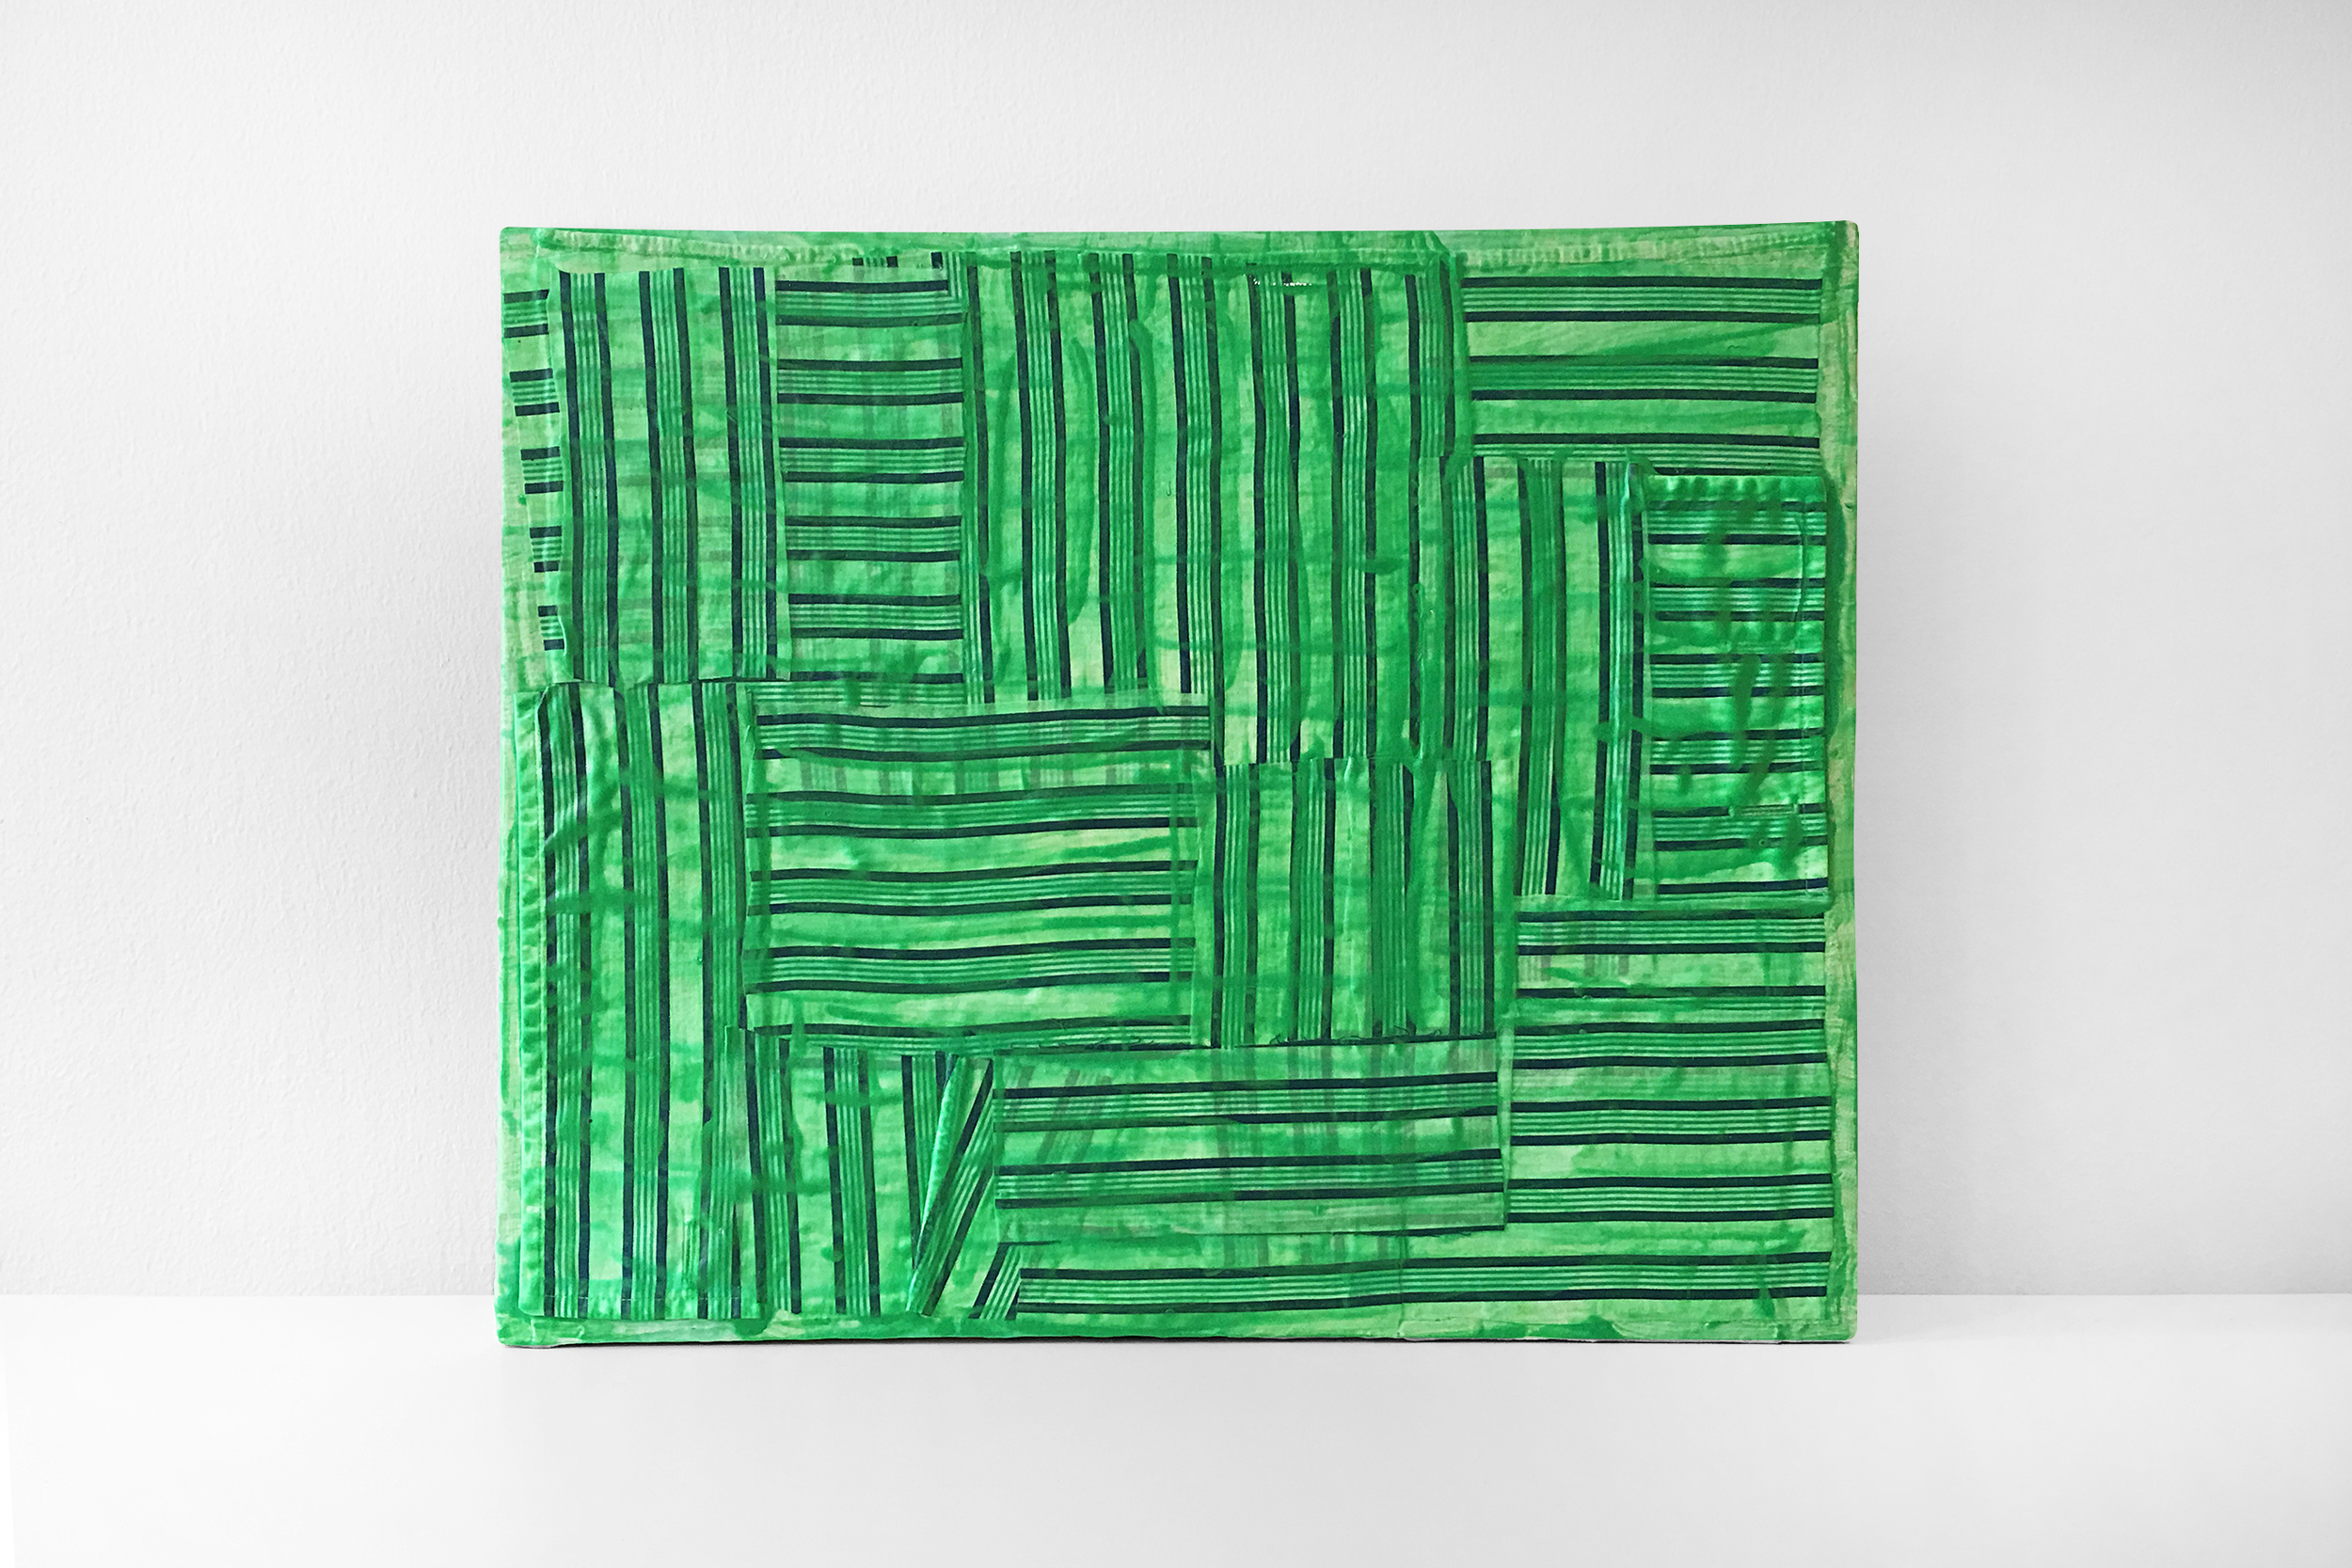  Turnbull Green, 2015 mixed media on fabric 33x40 cm / 13x16 in  EAF105     